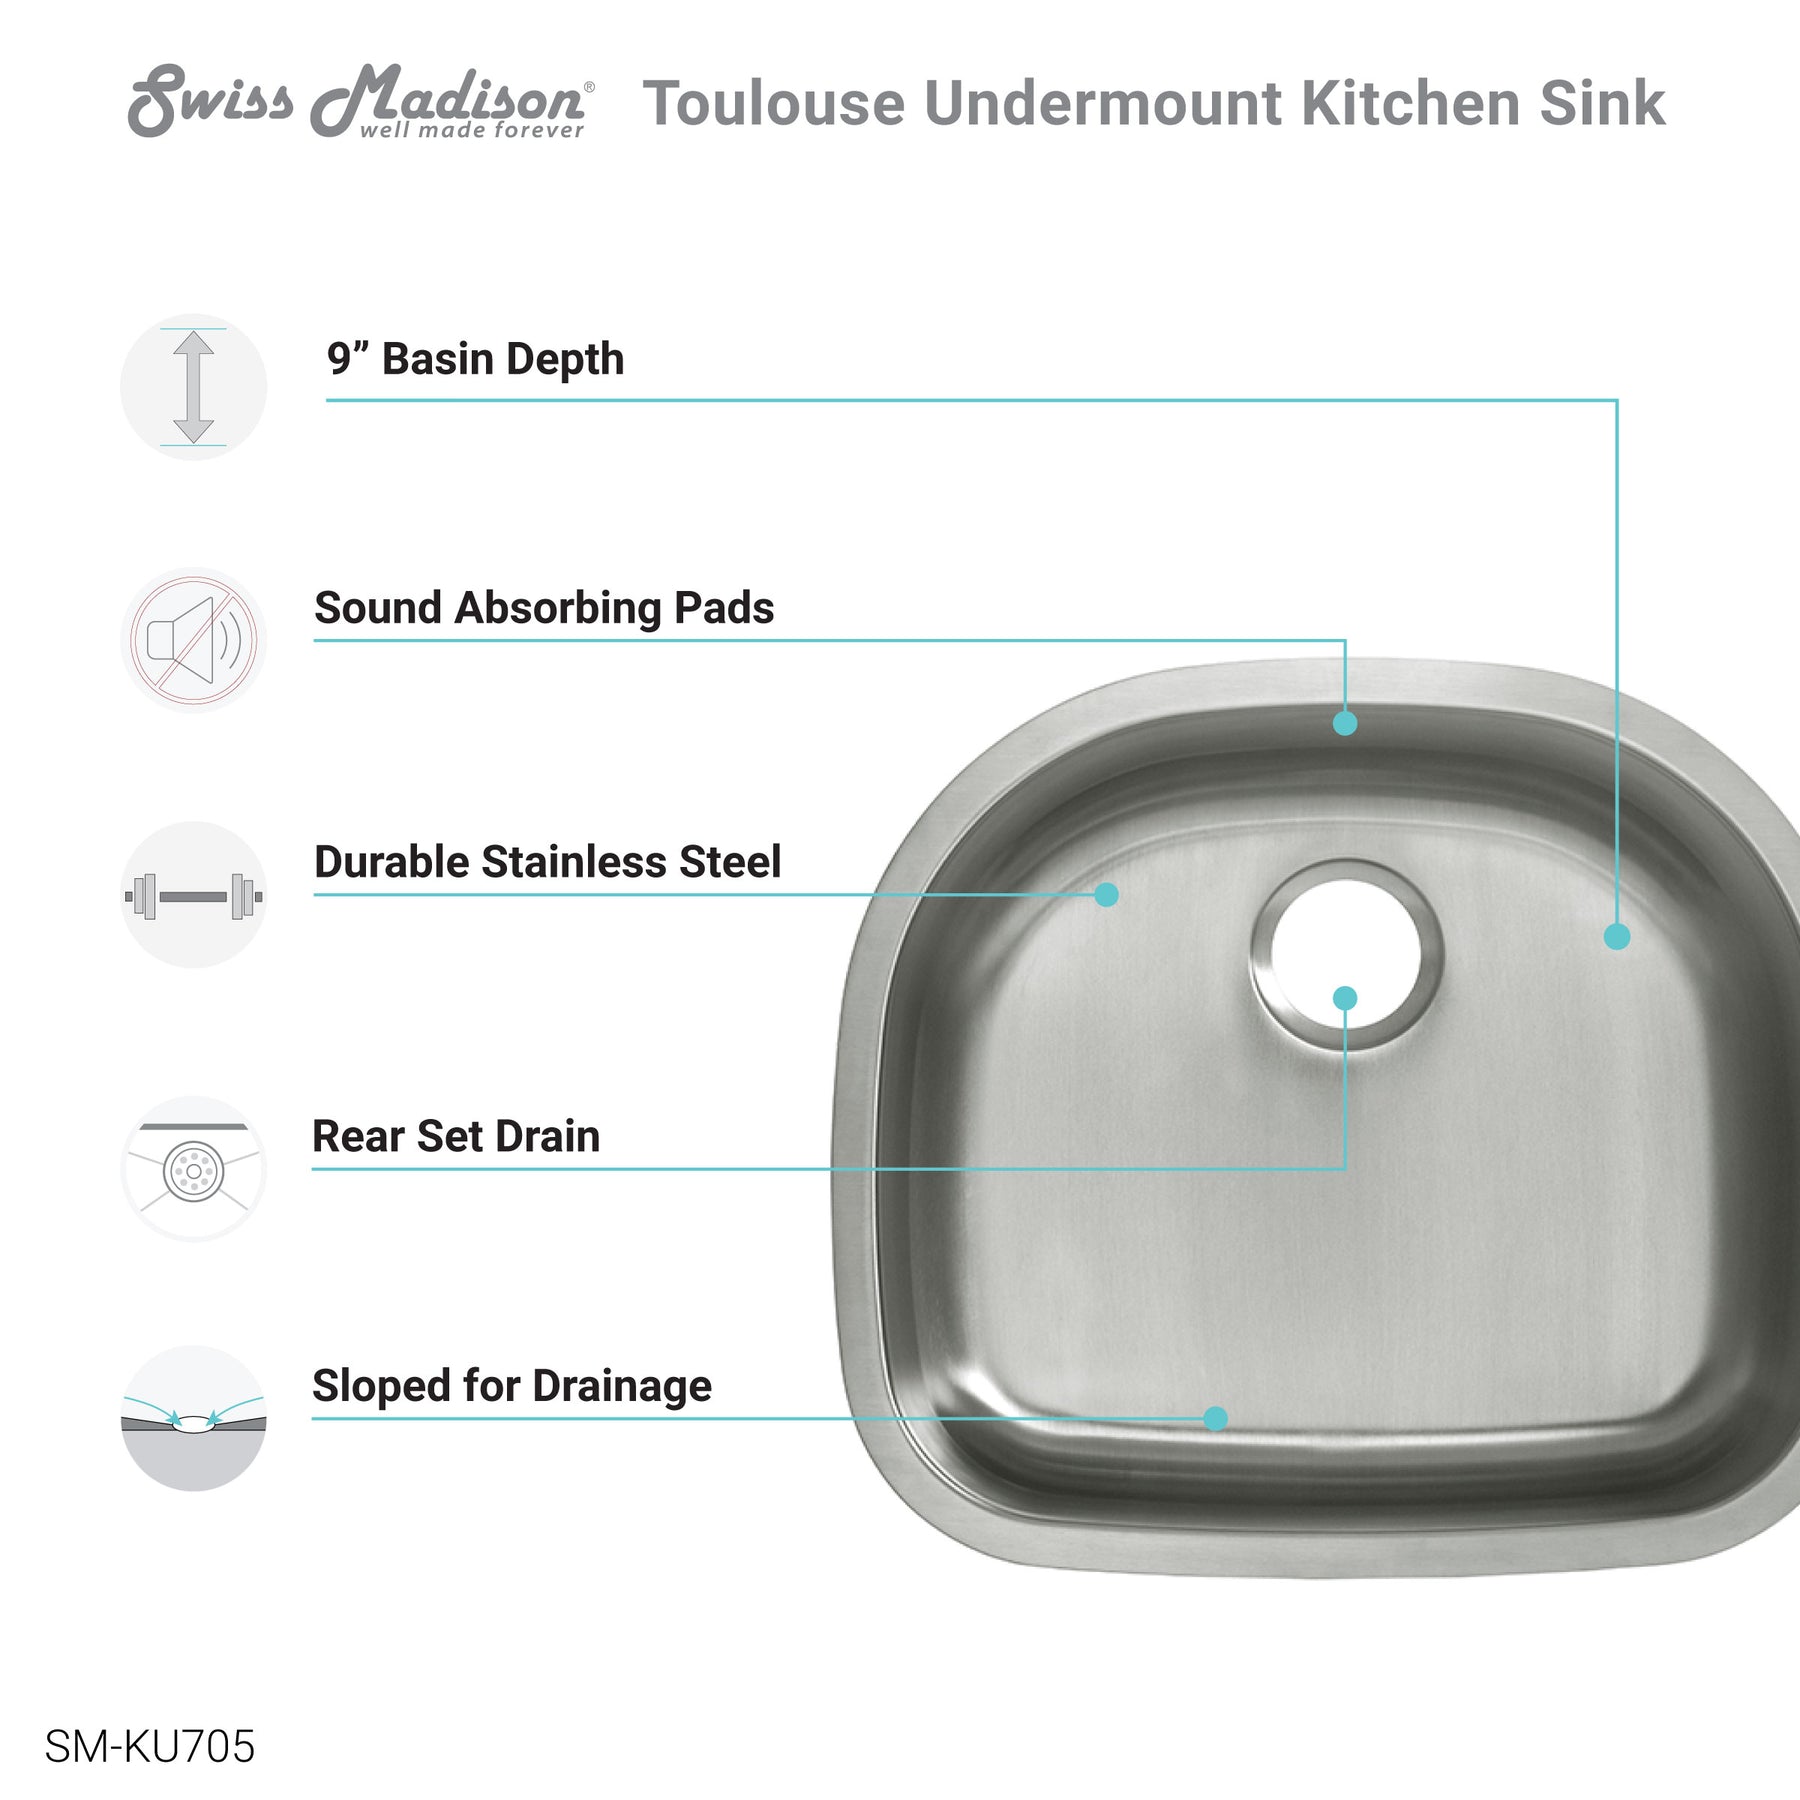 Swiss Madison Toulouse 23 5/8 x 21 Stainless Steel, Single Basin, Undermount Kitchen Sink - SM-KU705